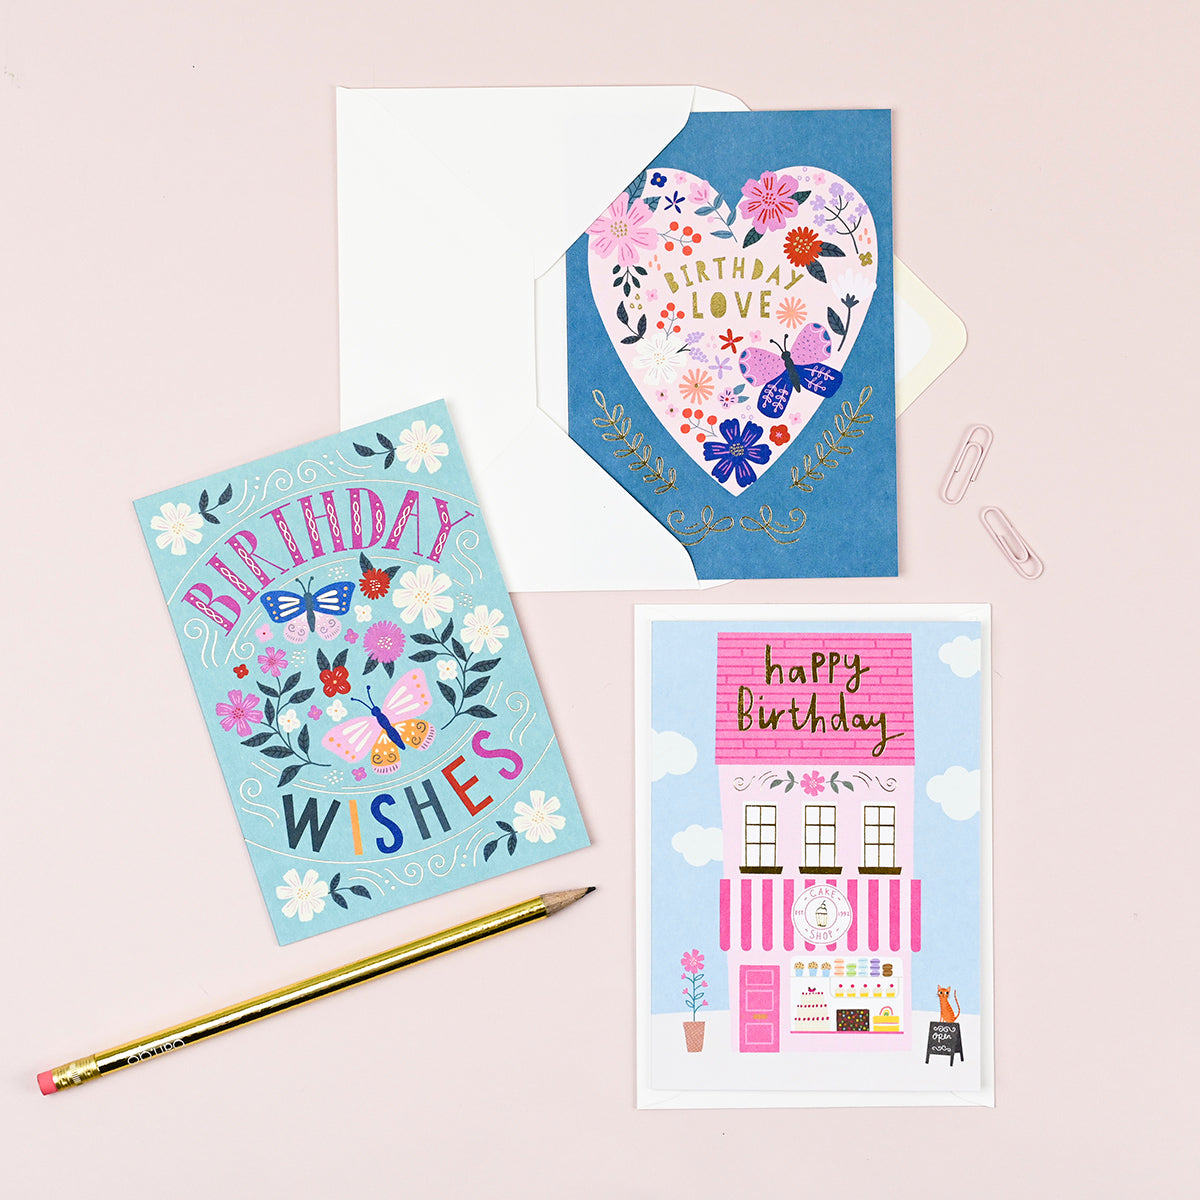 Birthday Love Heart Card | Birthday Card | Female Birthday | default - Muddy Boots Home UK